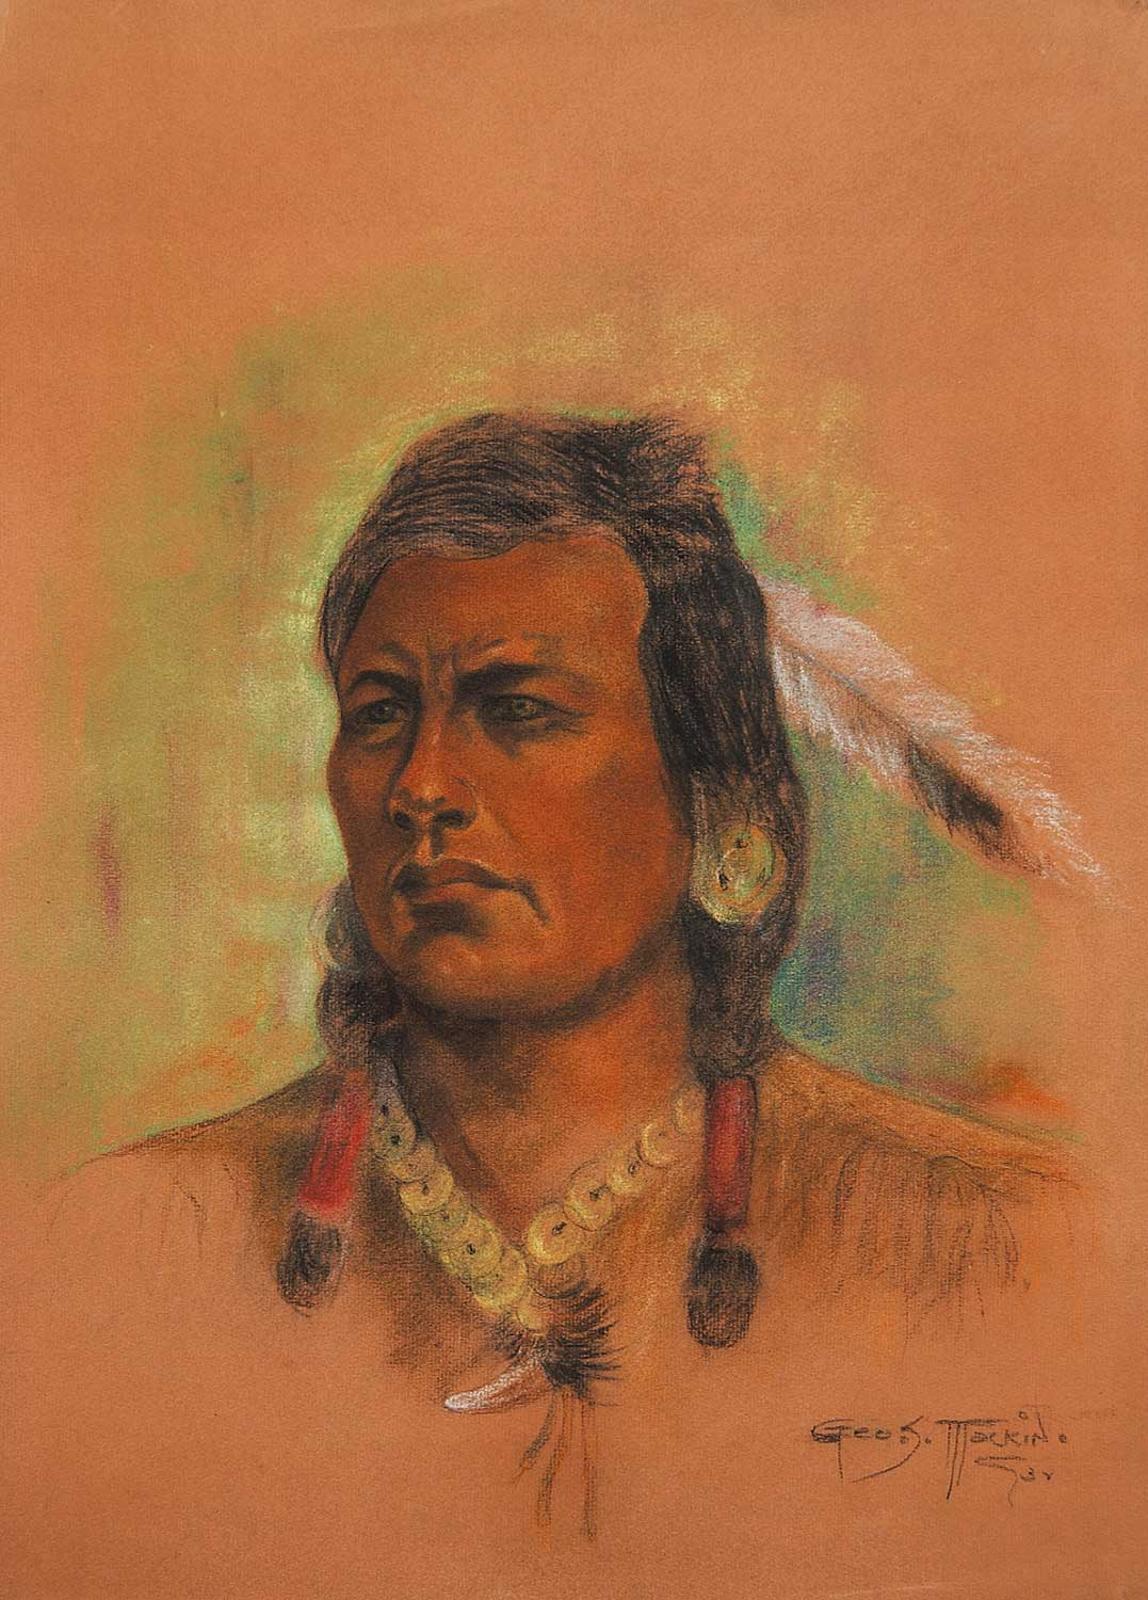 Geo Mackin - Untitled - Portrait of an Indian